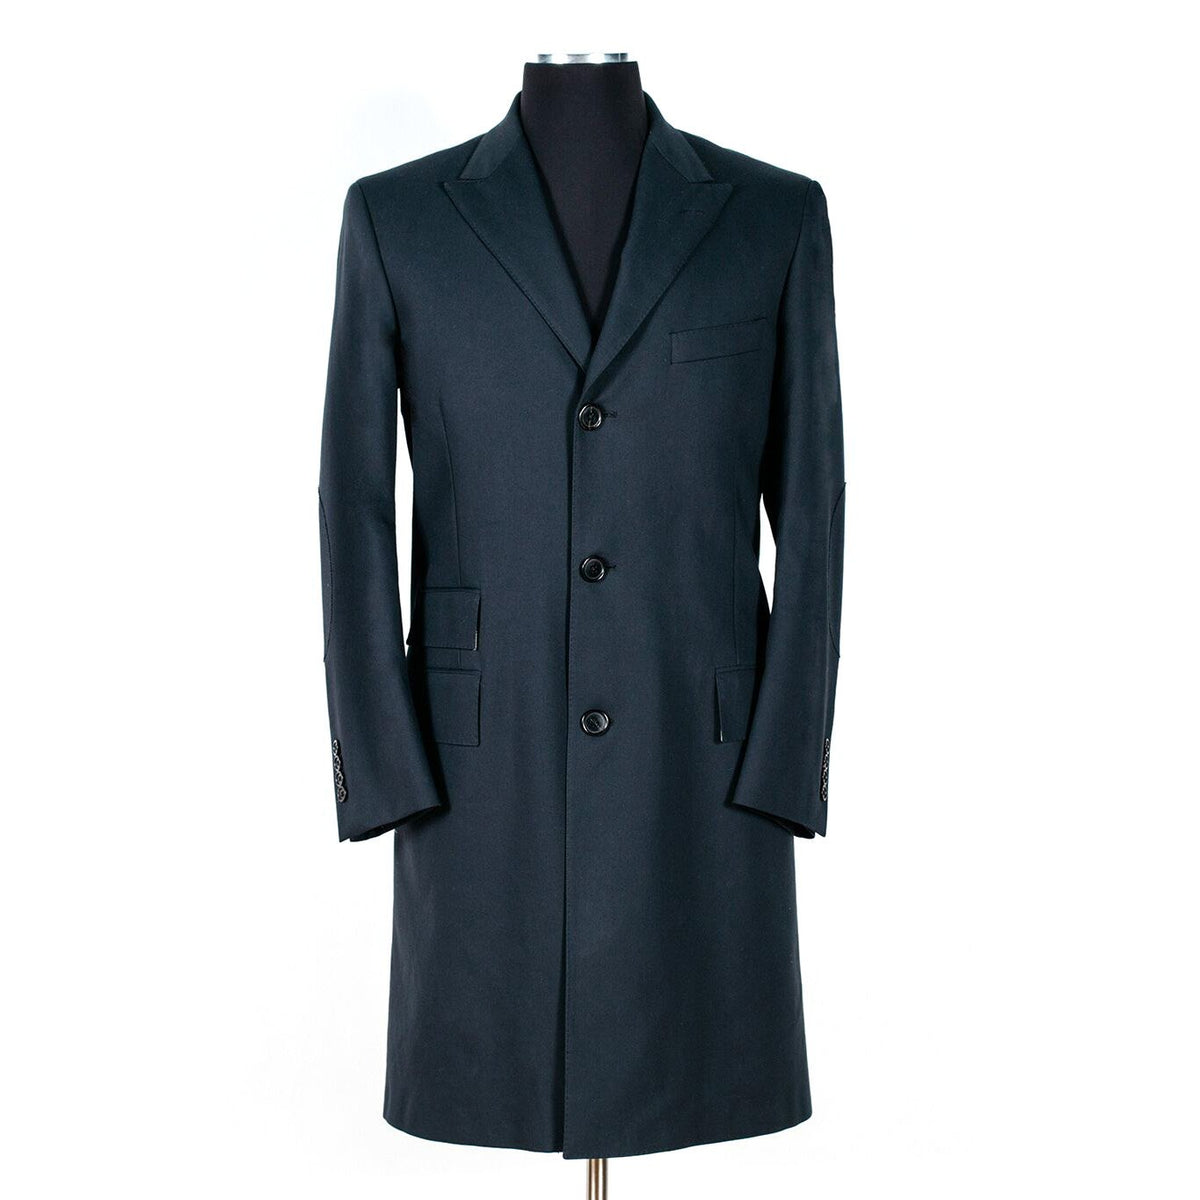 Stealth Raincoat - Black Outerwear Commonwealth Proper